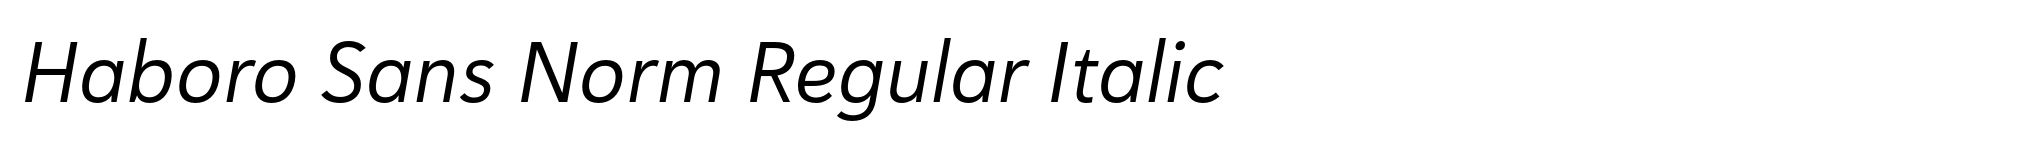 Haboro Sans Norm Regular Italic image